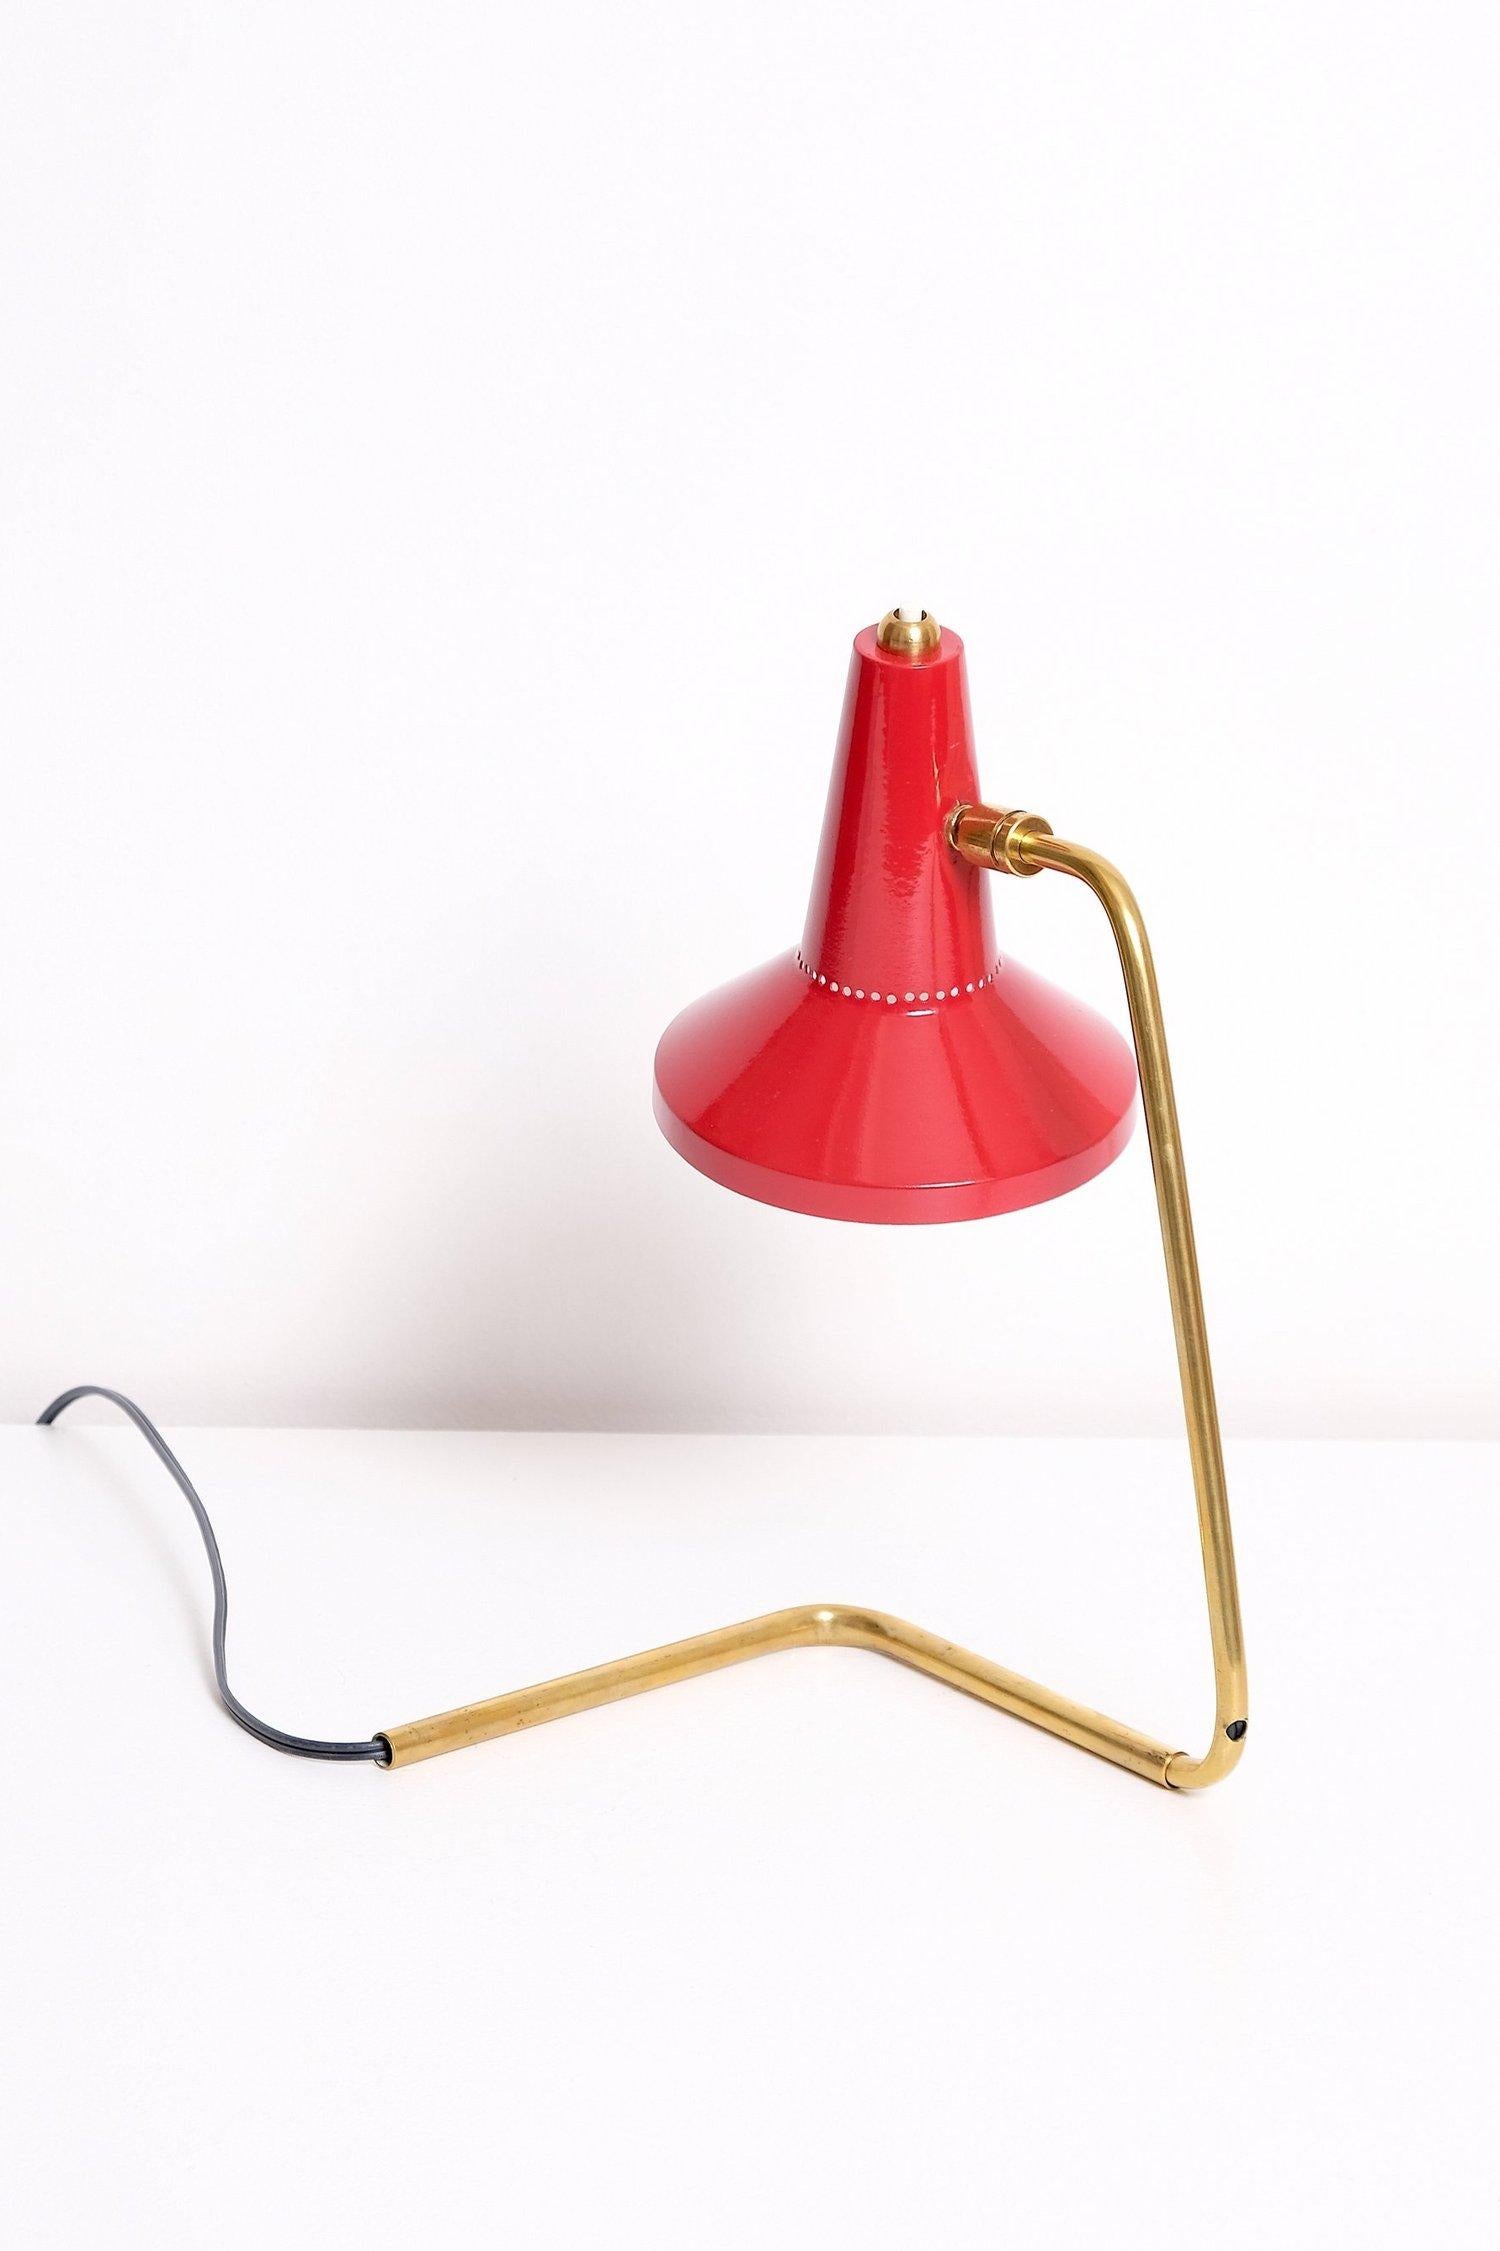 Mid-Century Modern Giuseppe Ostuni Oluce Desk Lamp #223 For Sale